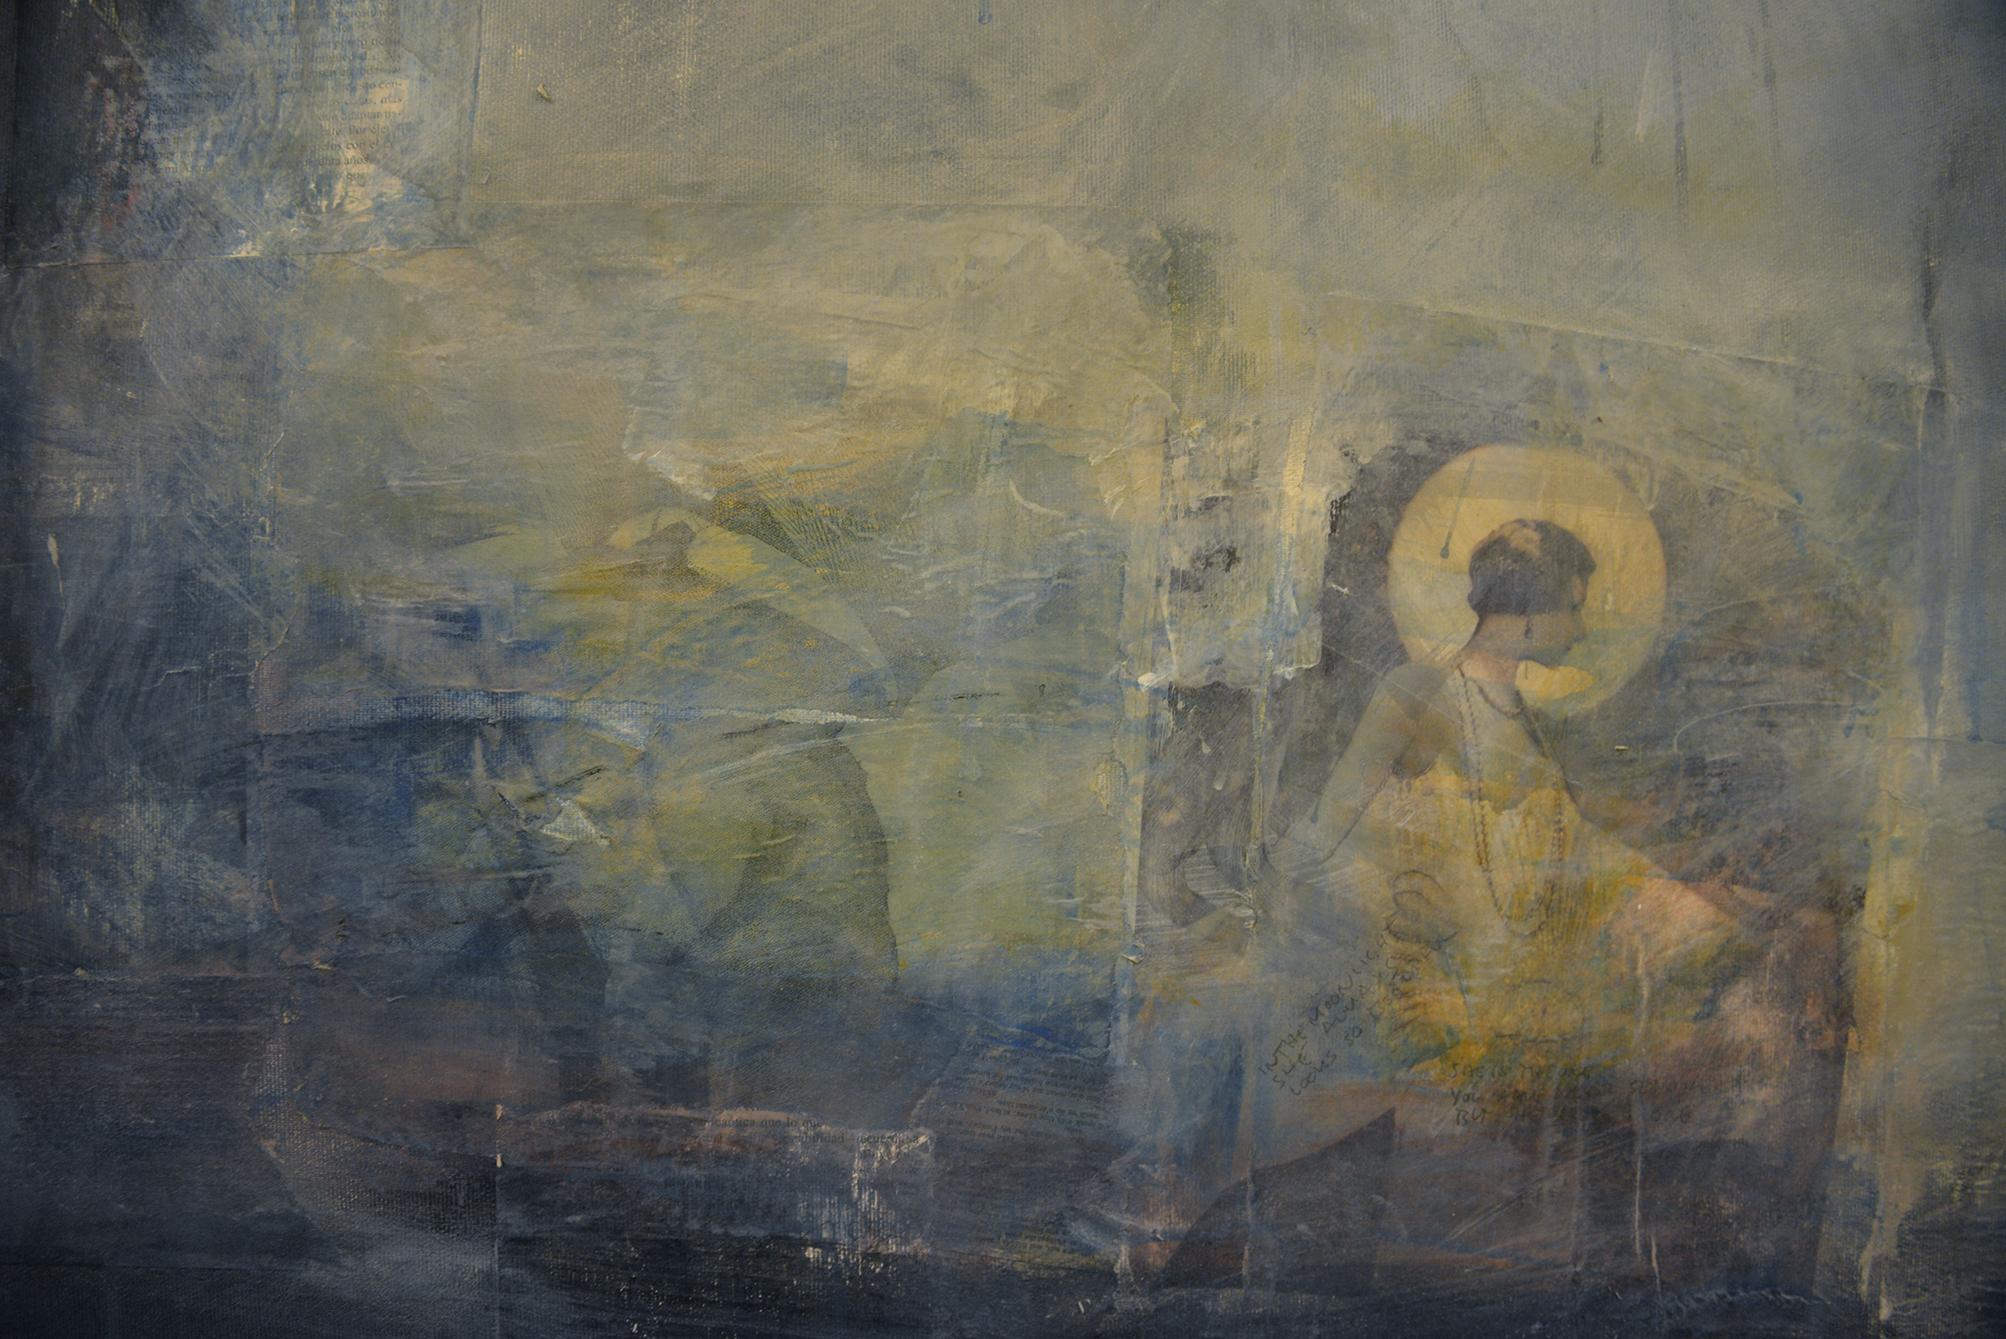 Drama, acrylic and mixed media abstract painting - Abstract Painting by Robert van Bolderick